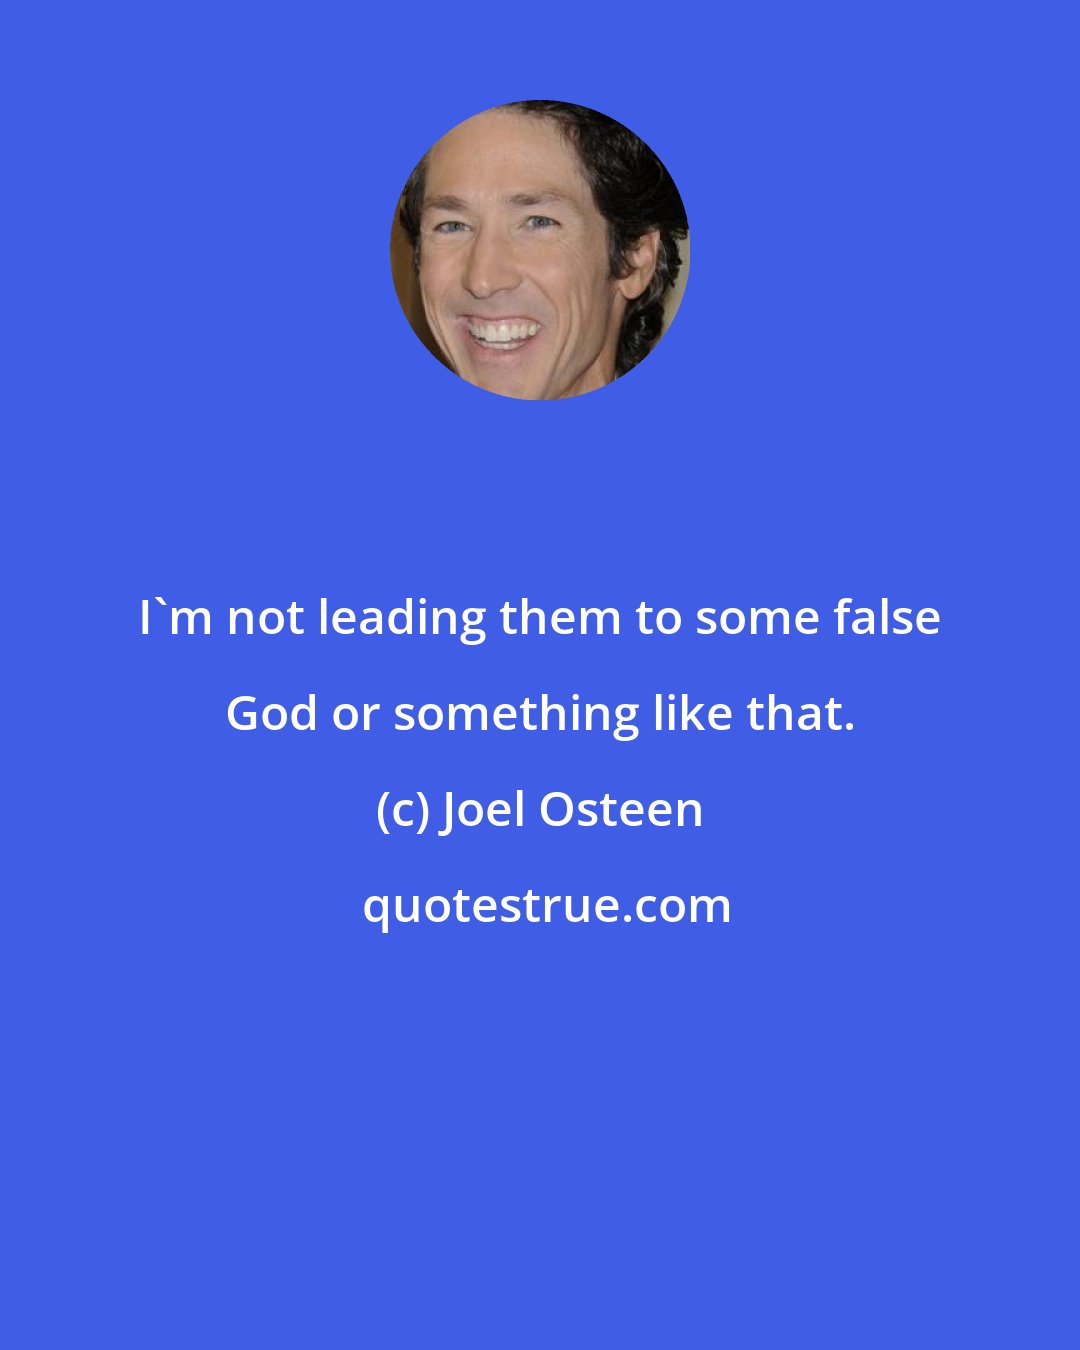 Joel Osteen: I'm not leading them to some false God or something like that.